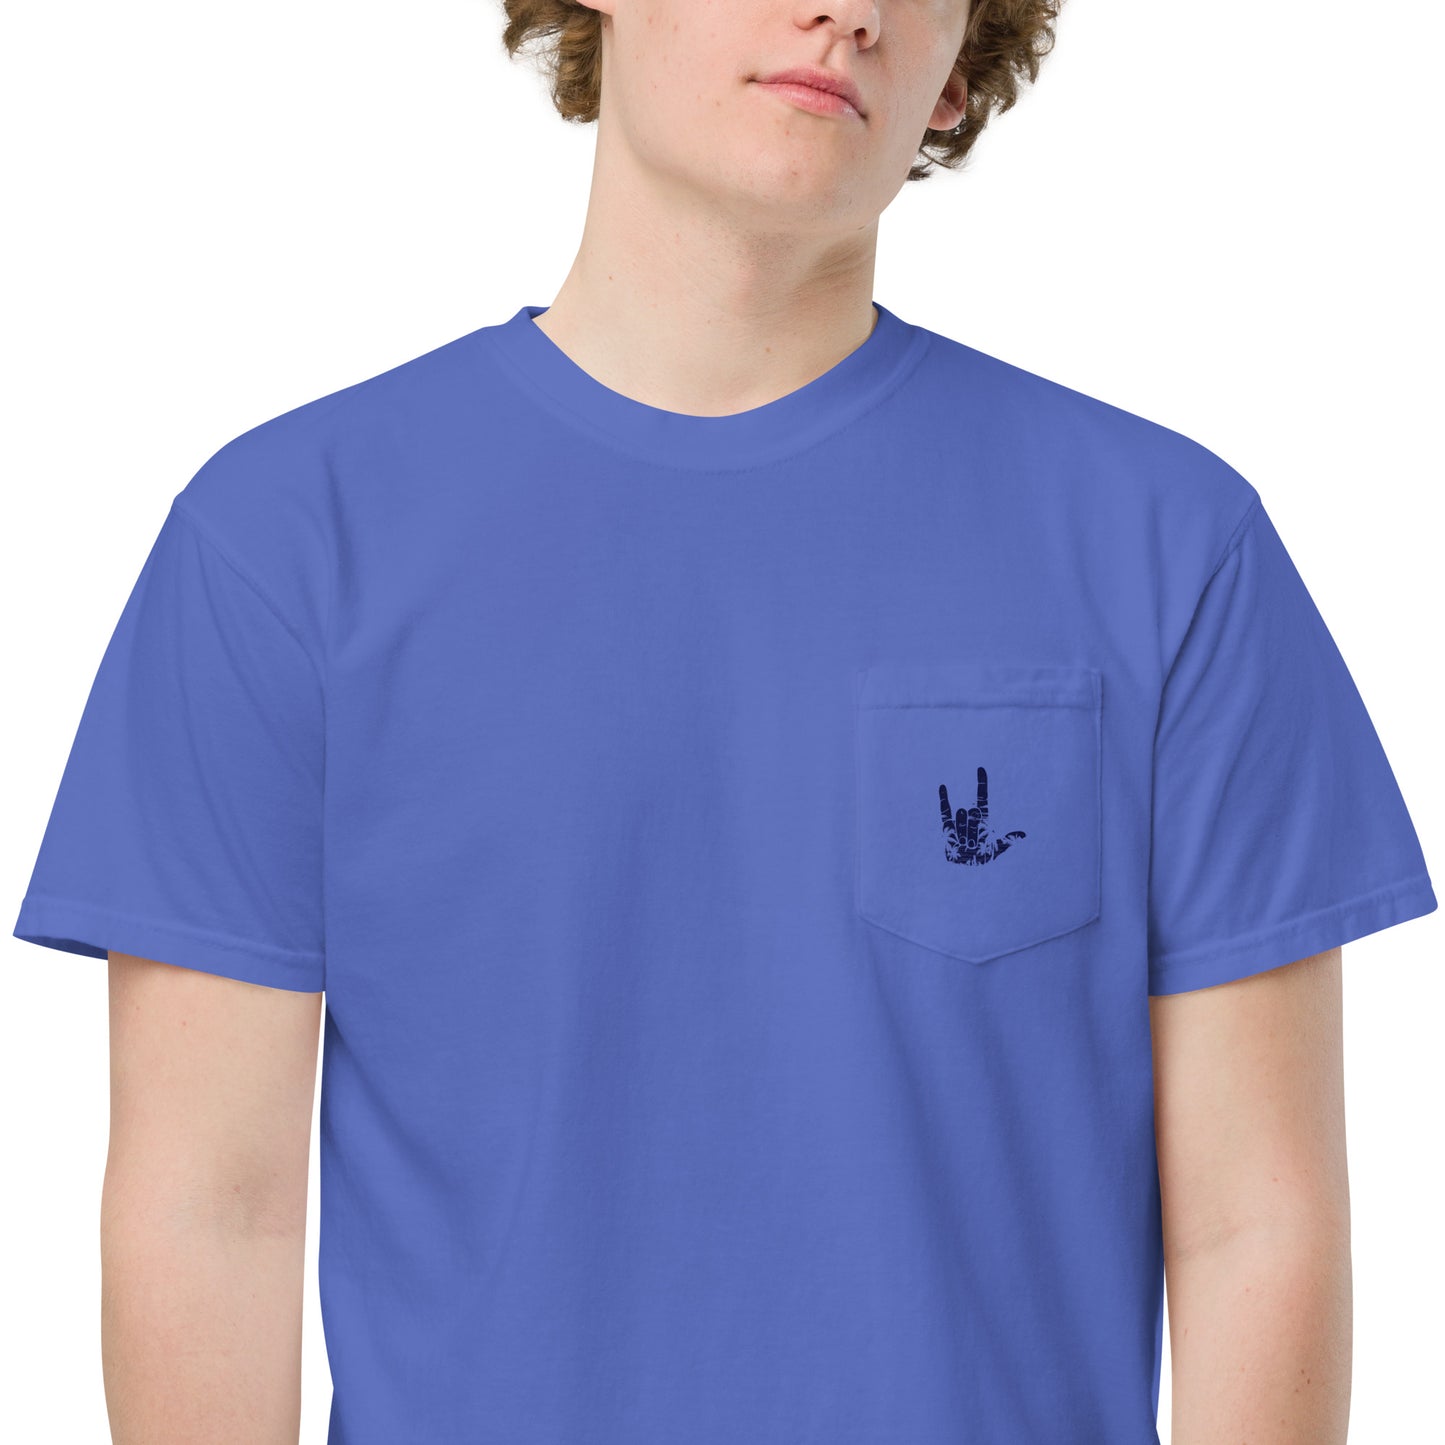 ILY Beach Blue Unisex pocket t-shirt